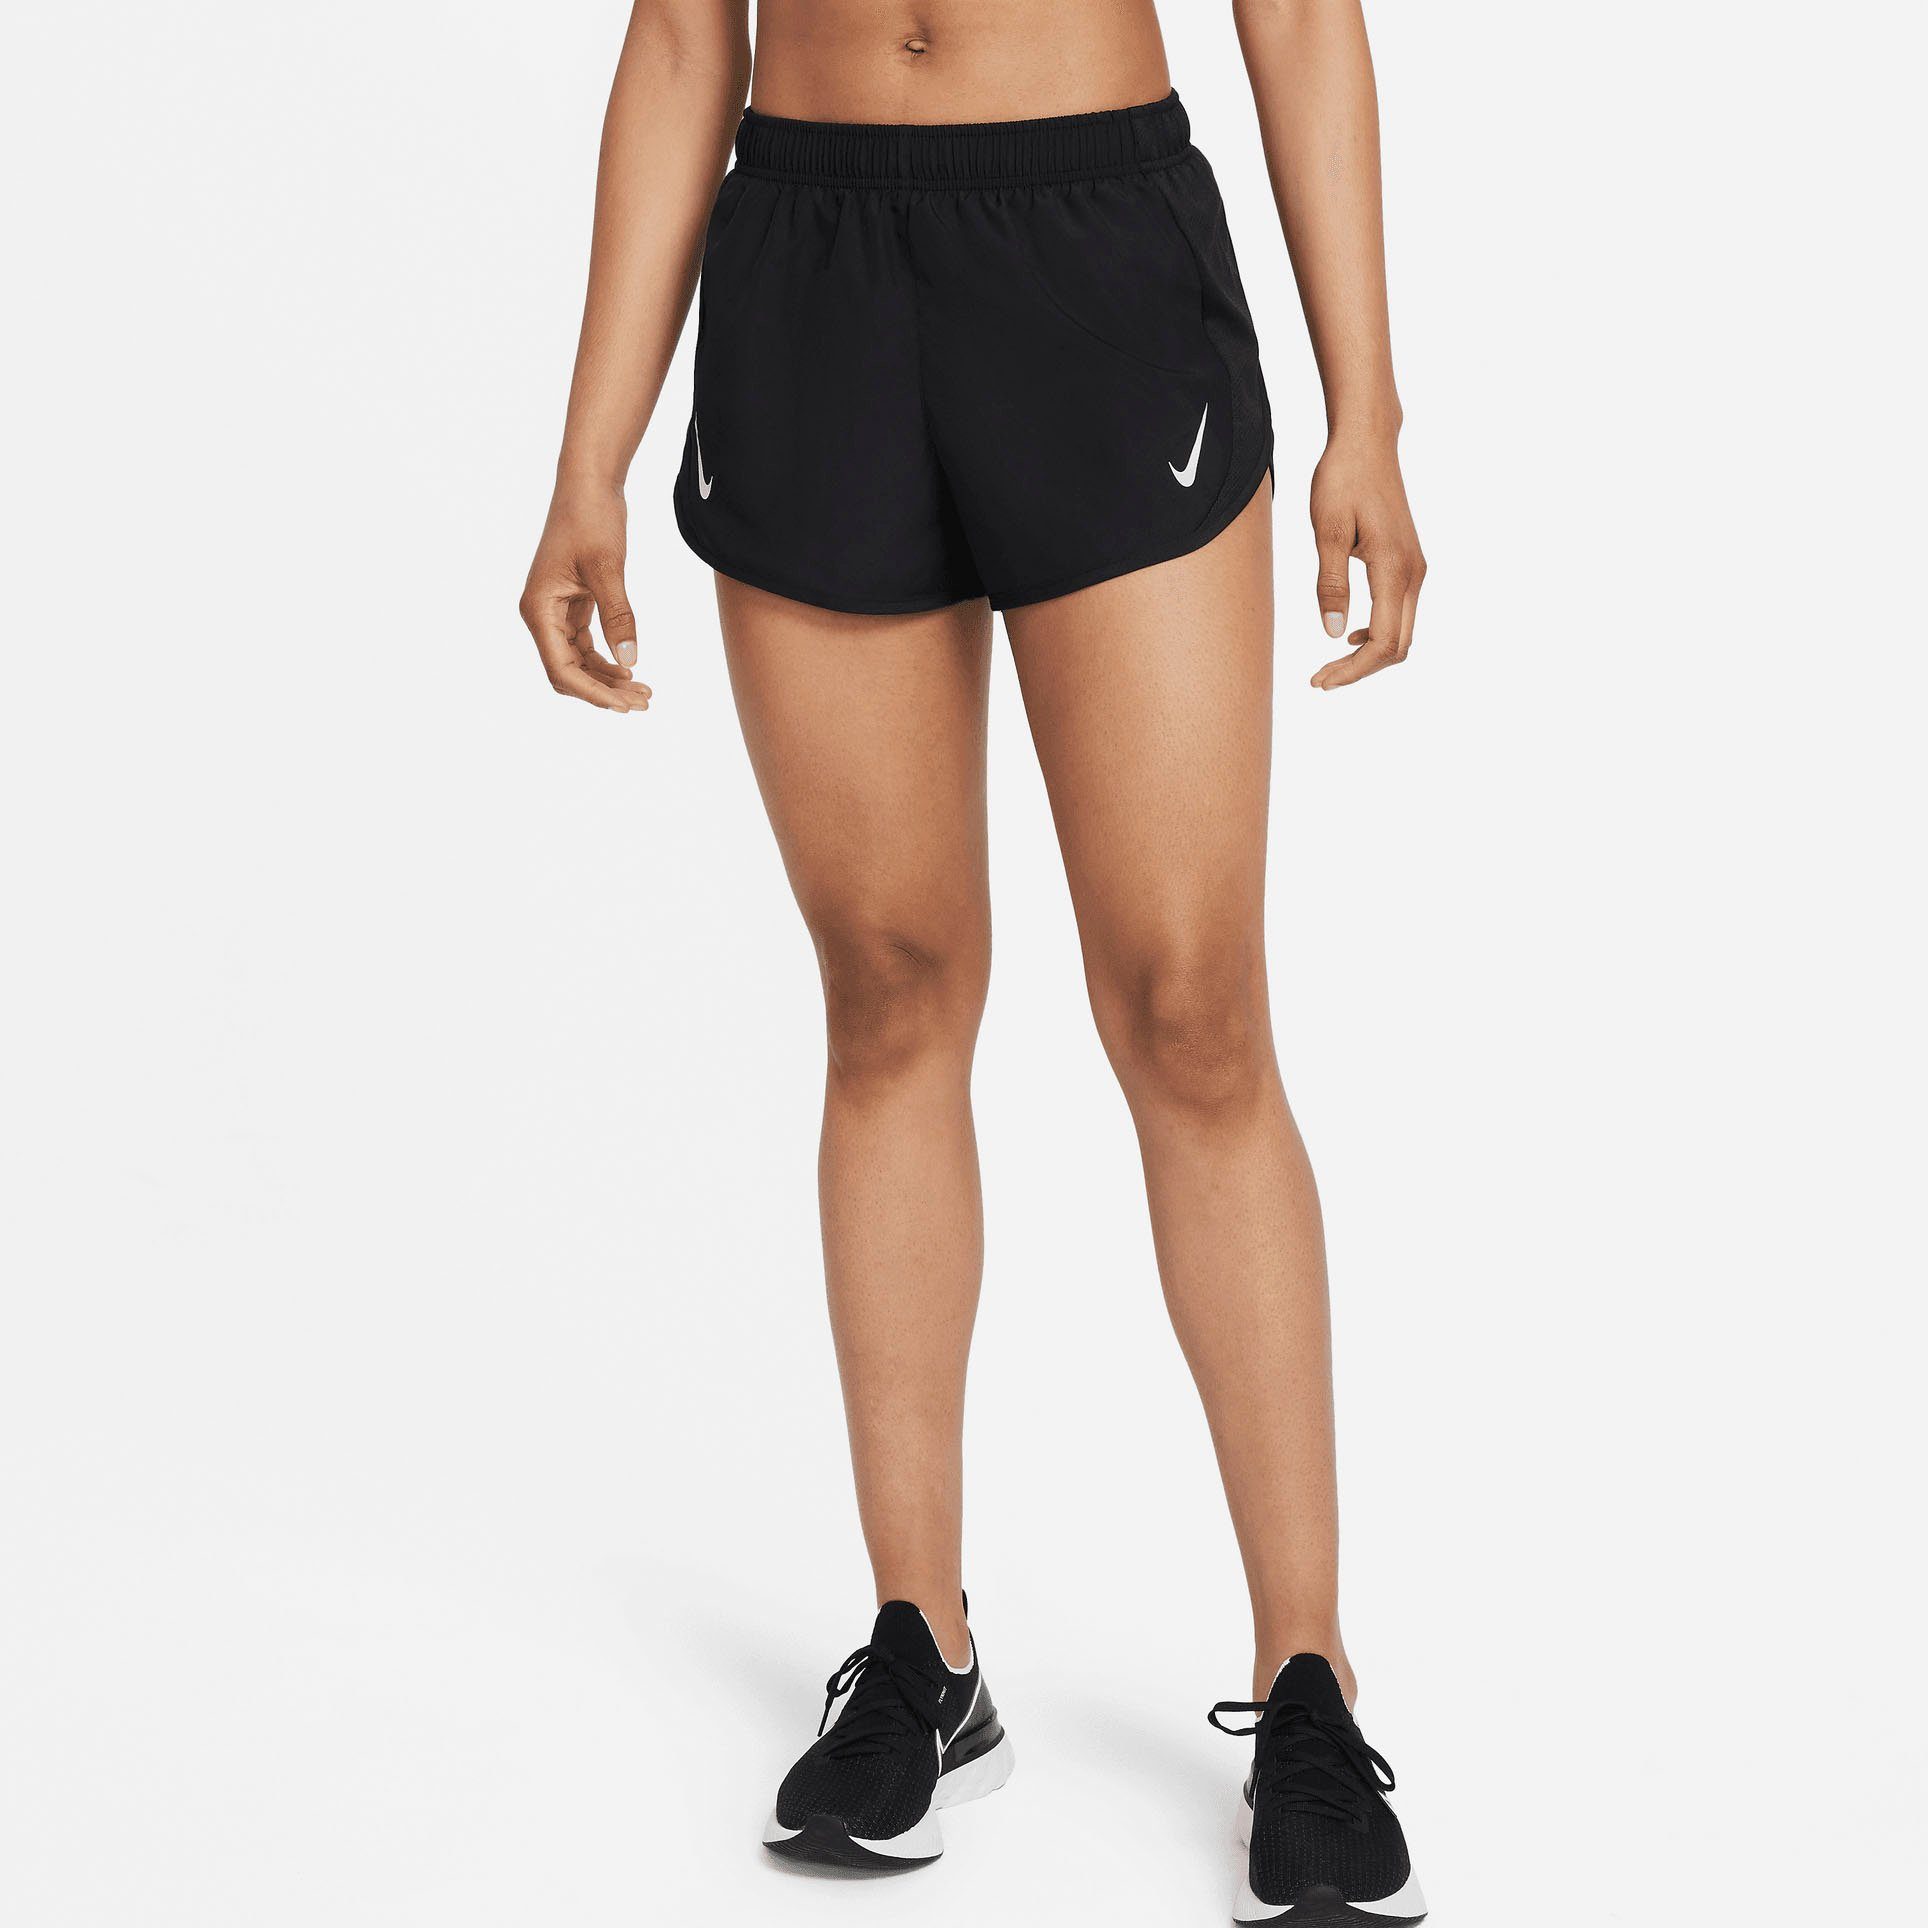 Race Nike Dri-FIT schwarz Tempo Laufshorts Women's Running Shorts